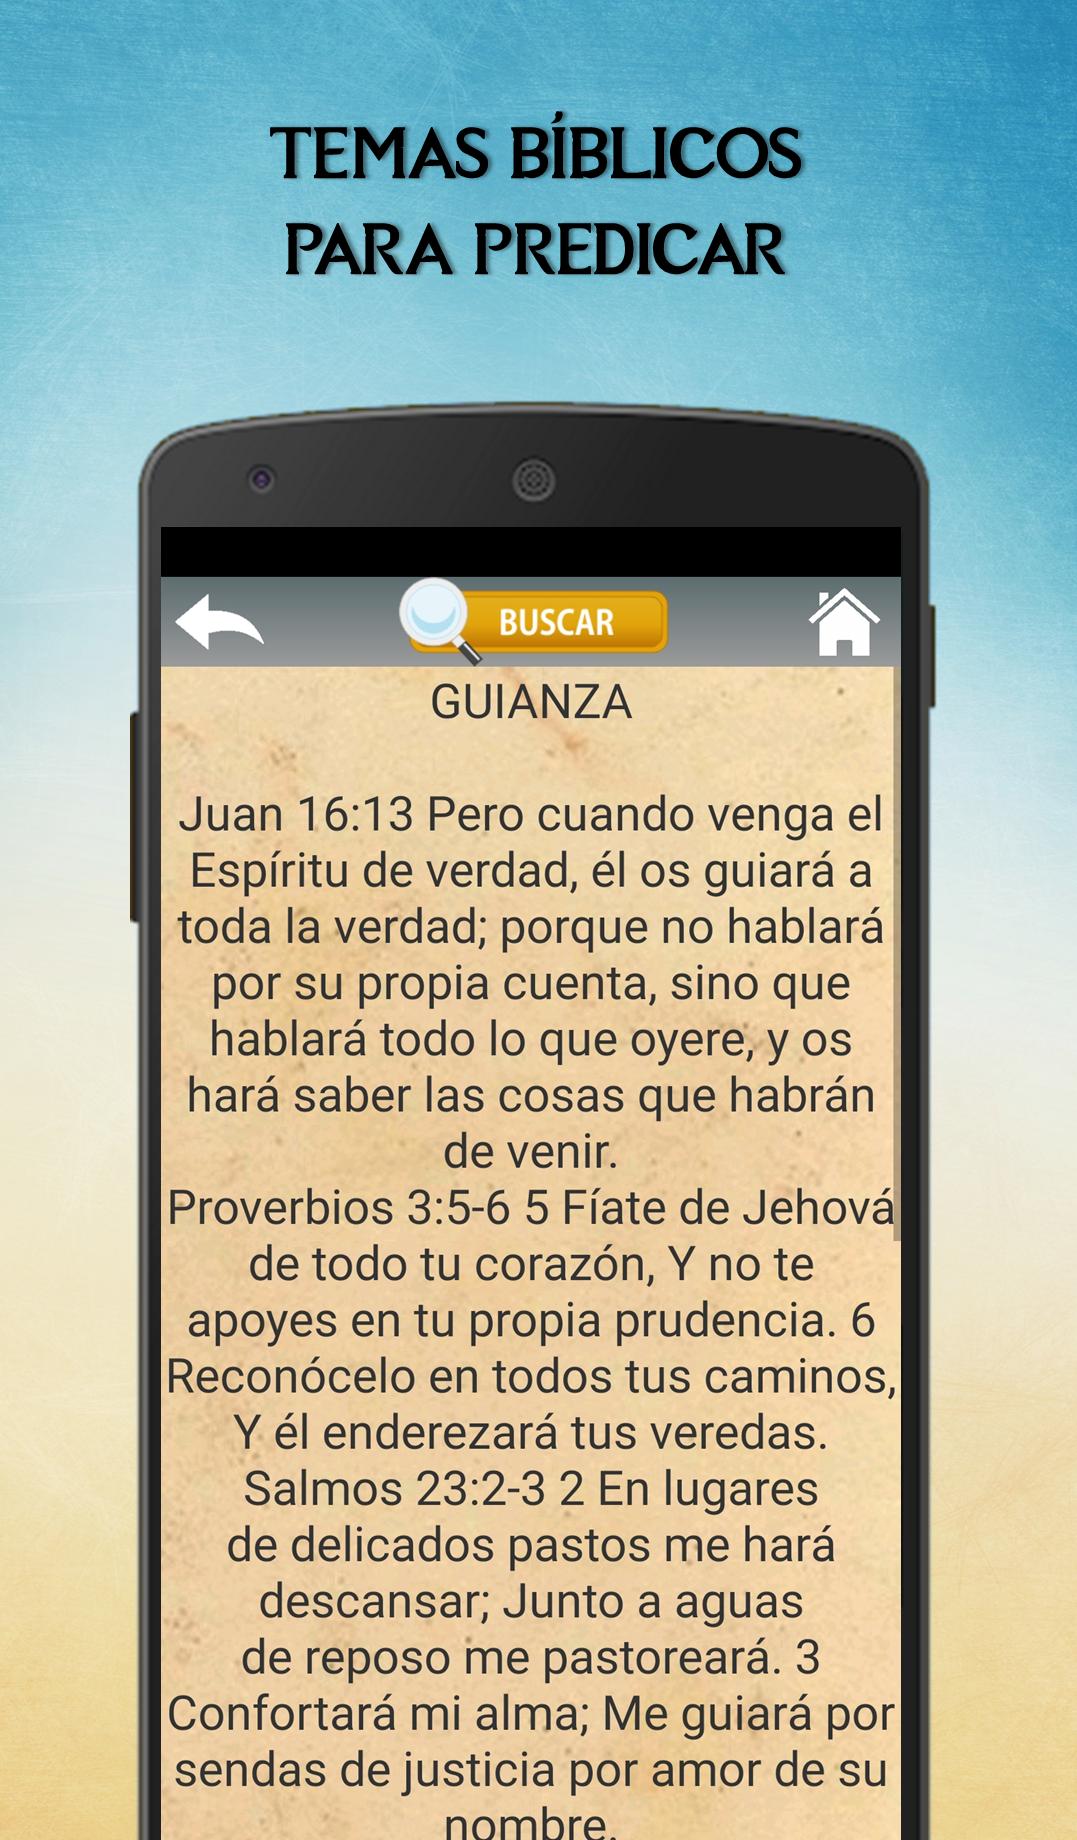 Temas Bíblicos para predicar 14.0.0 Screenshot 22